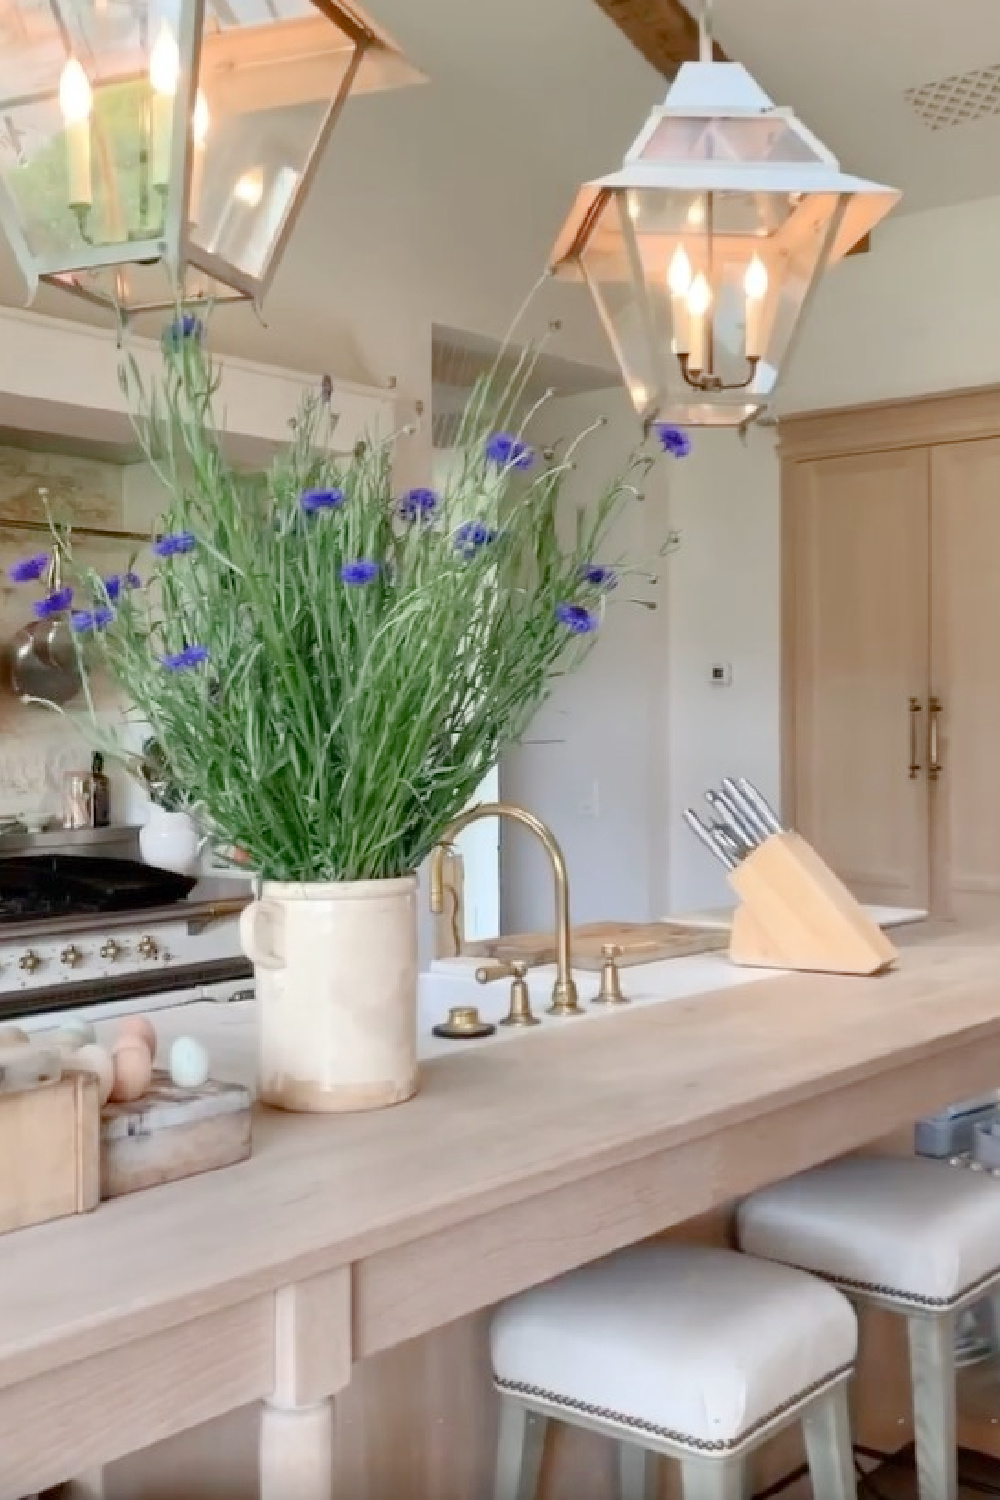 Patina Farm French farmhouse style kitchen with white oak, Lacanche range, limestone, and bespoke design by Giannetti Home. #patinafarm #frenchfarmhousekitchen